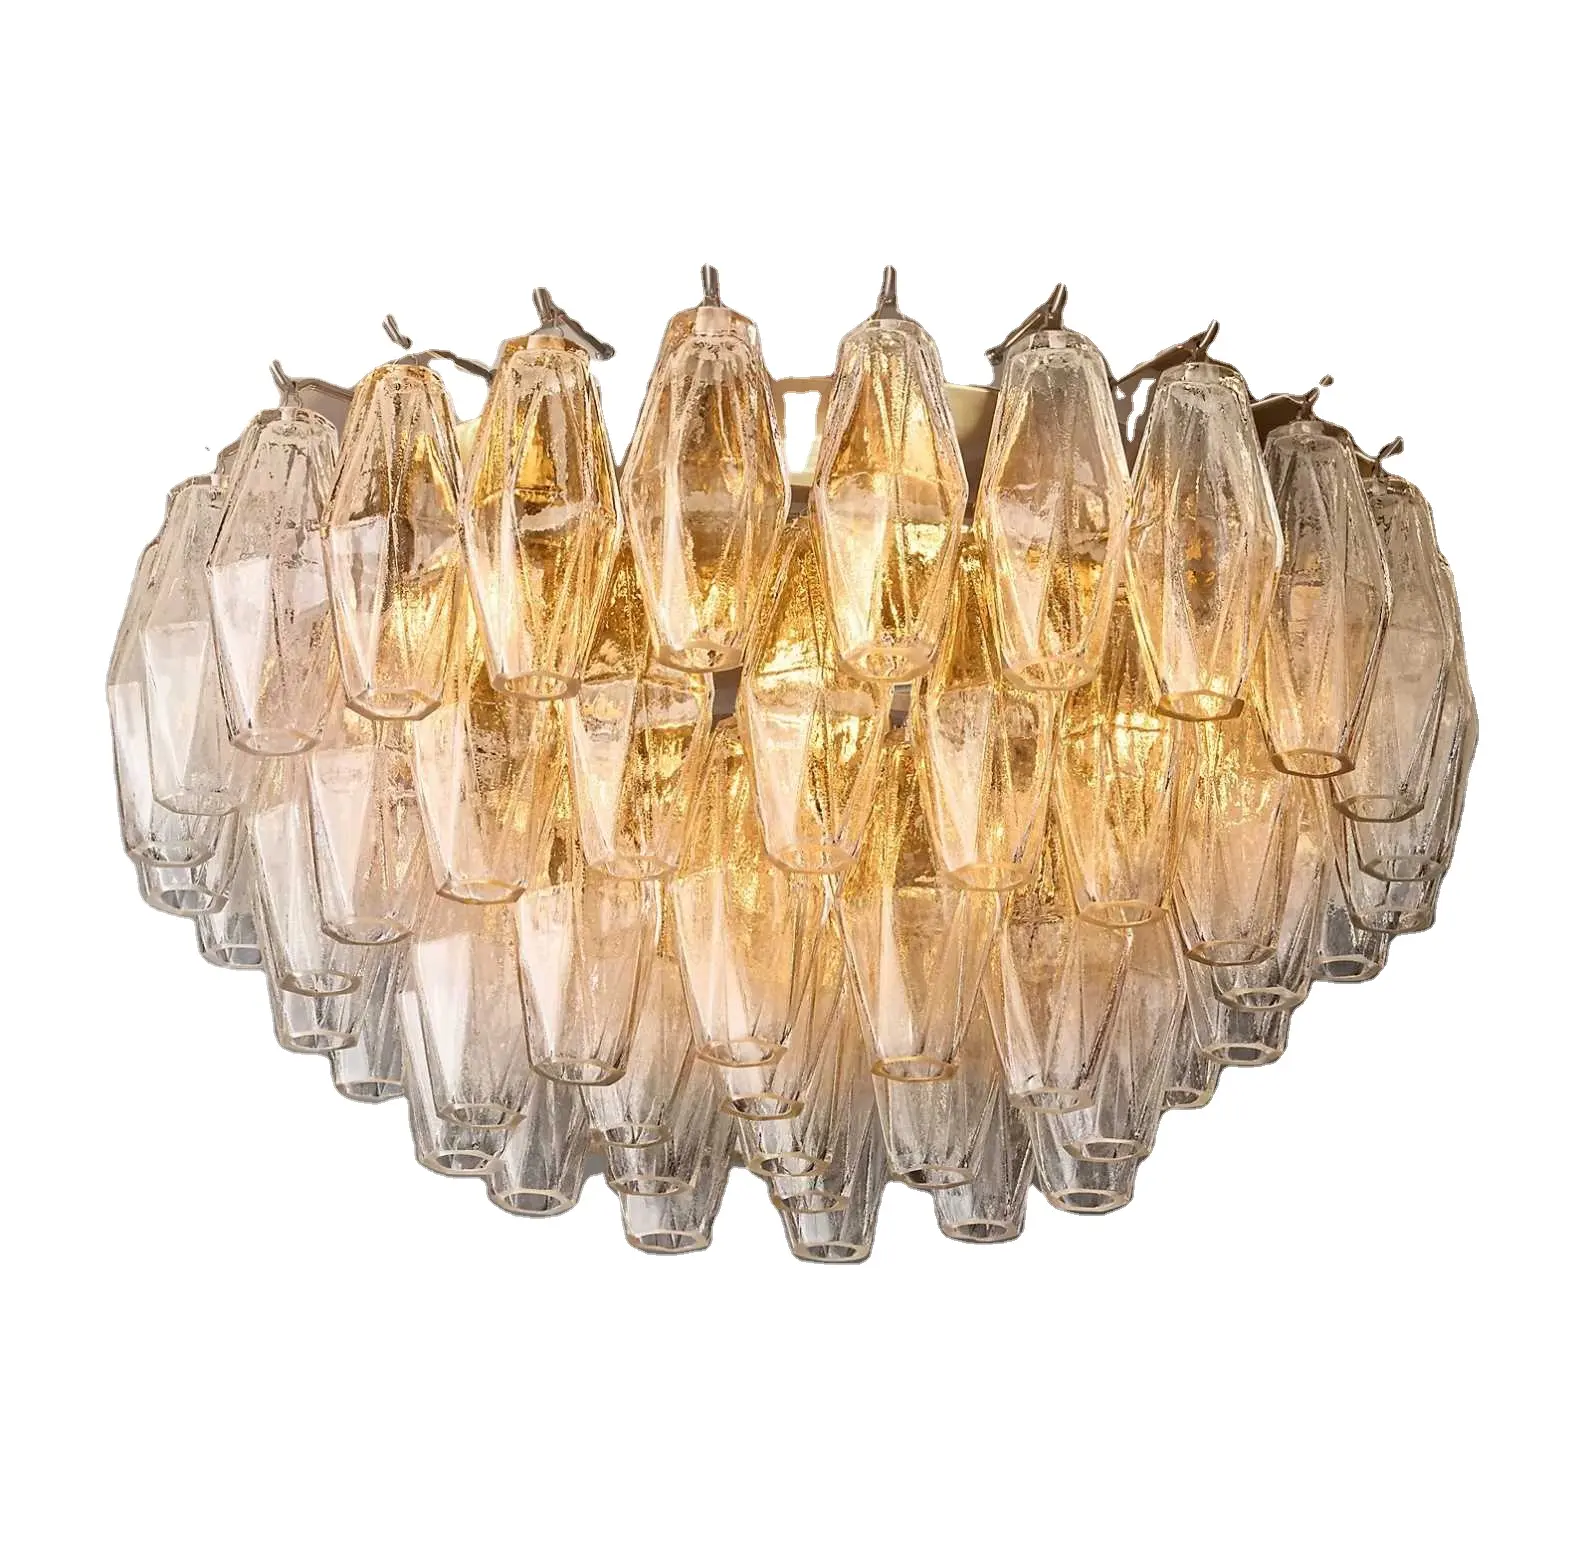 aisilan brass pendant light modern design adjustable ceiling chandelier lamp CHIARA SMOKE GLASS ceiling lamp